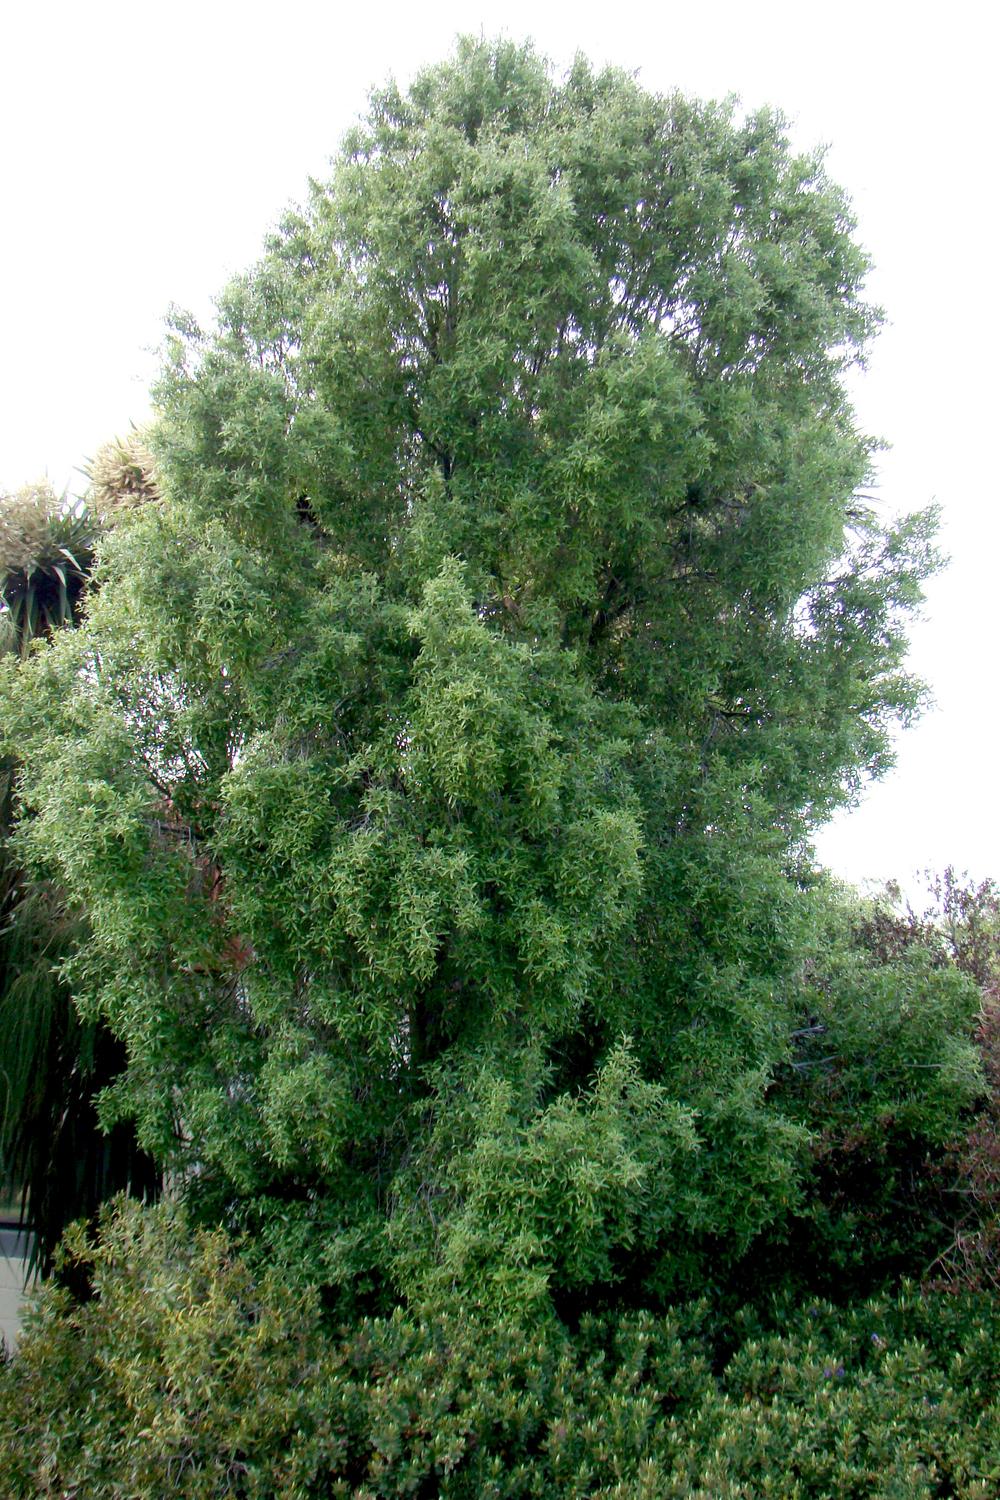 hoheria angustifolia